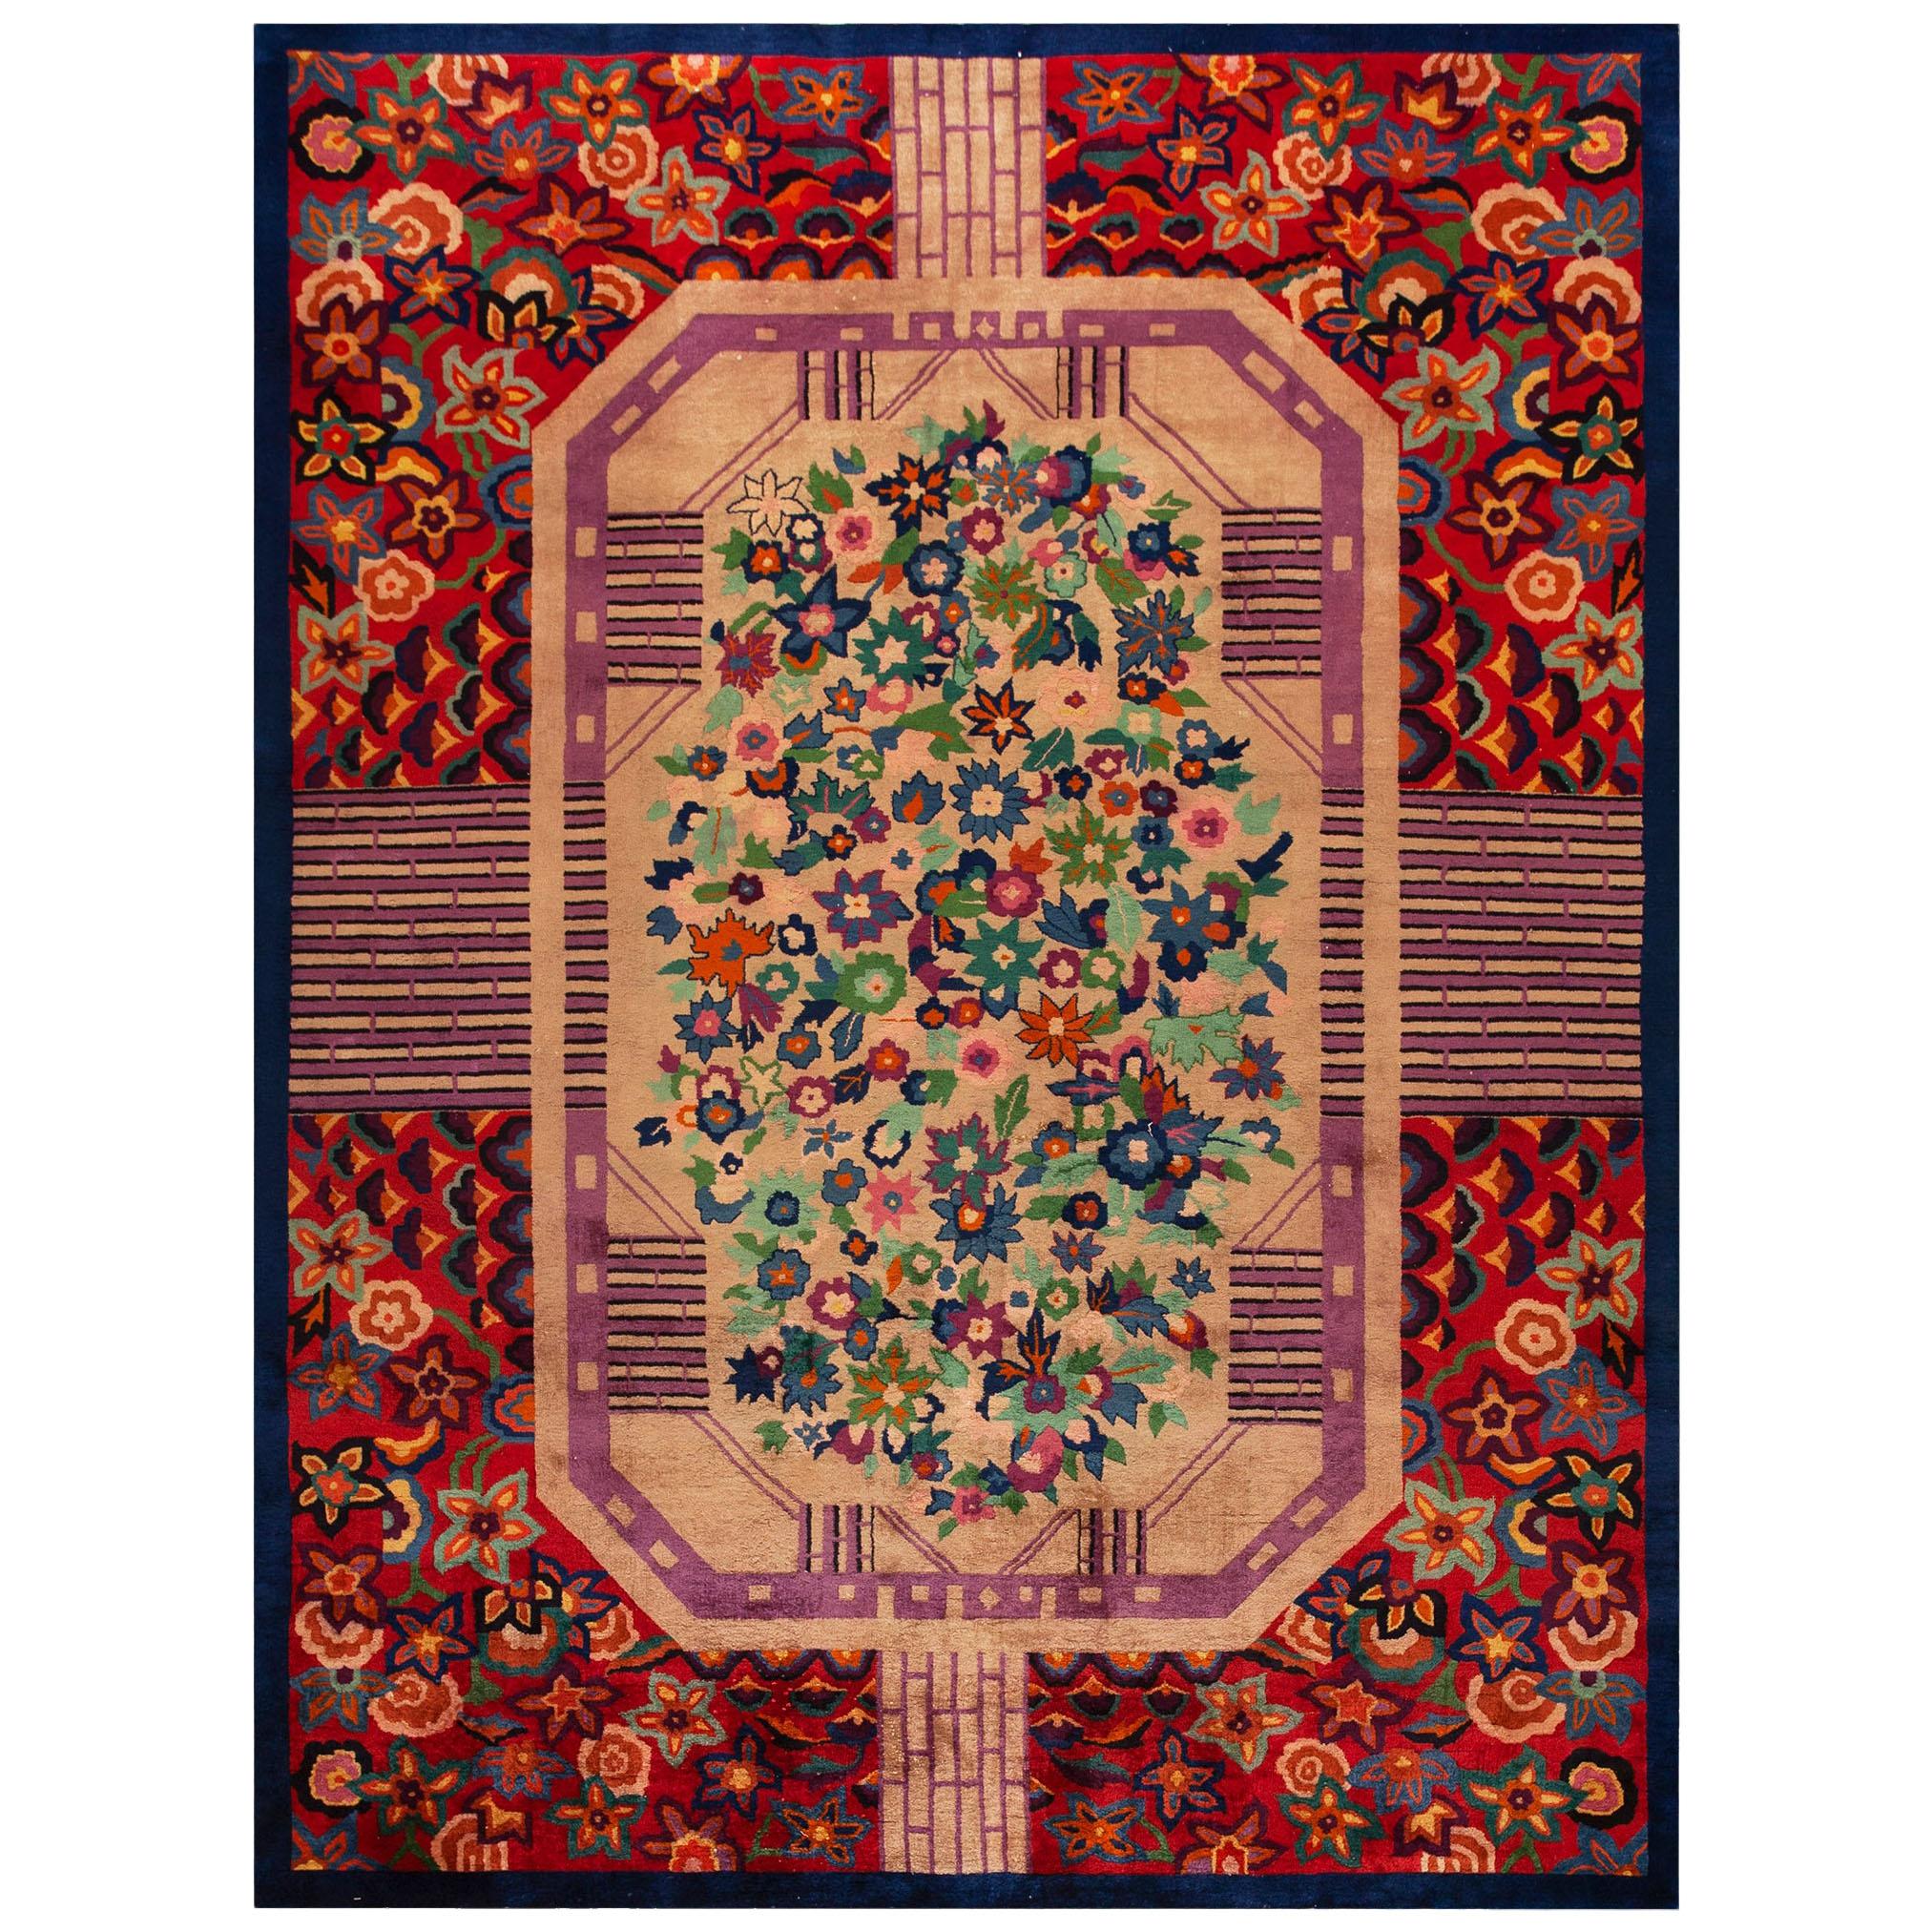 1920s Chinese Art Deco Carpet ( 8' 9" x 11' 6" - 266 x 350 cm) For Sale